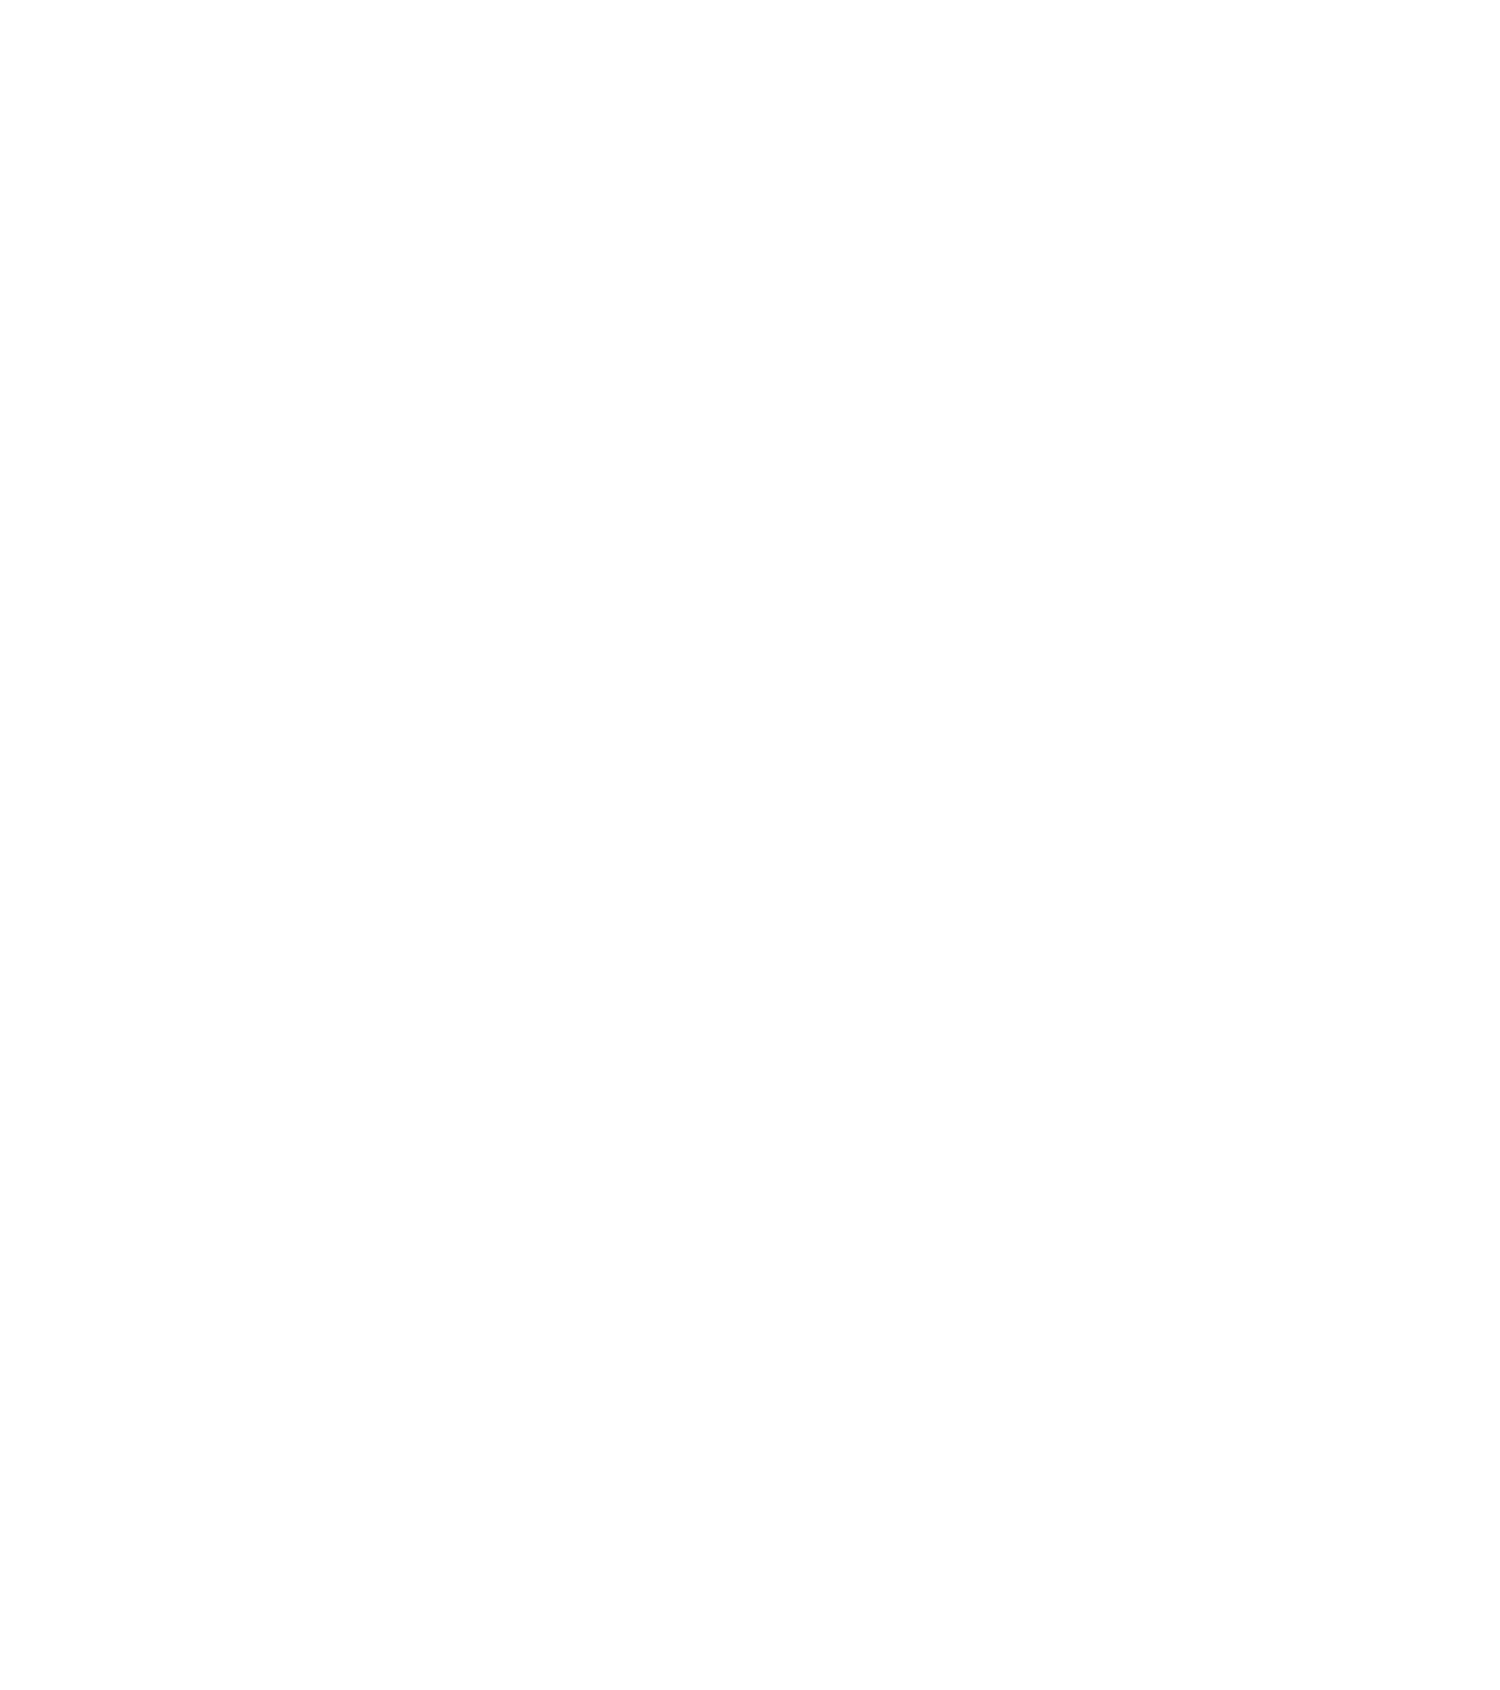 RB Christian Ironworks